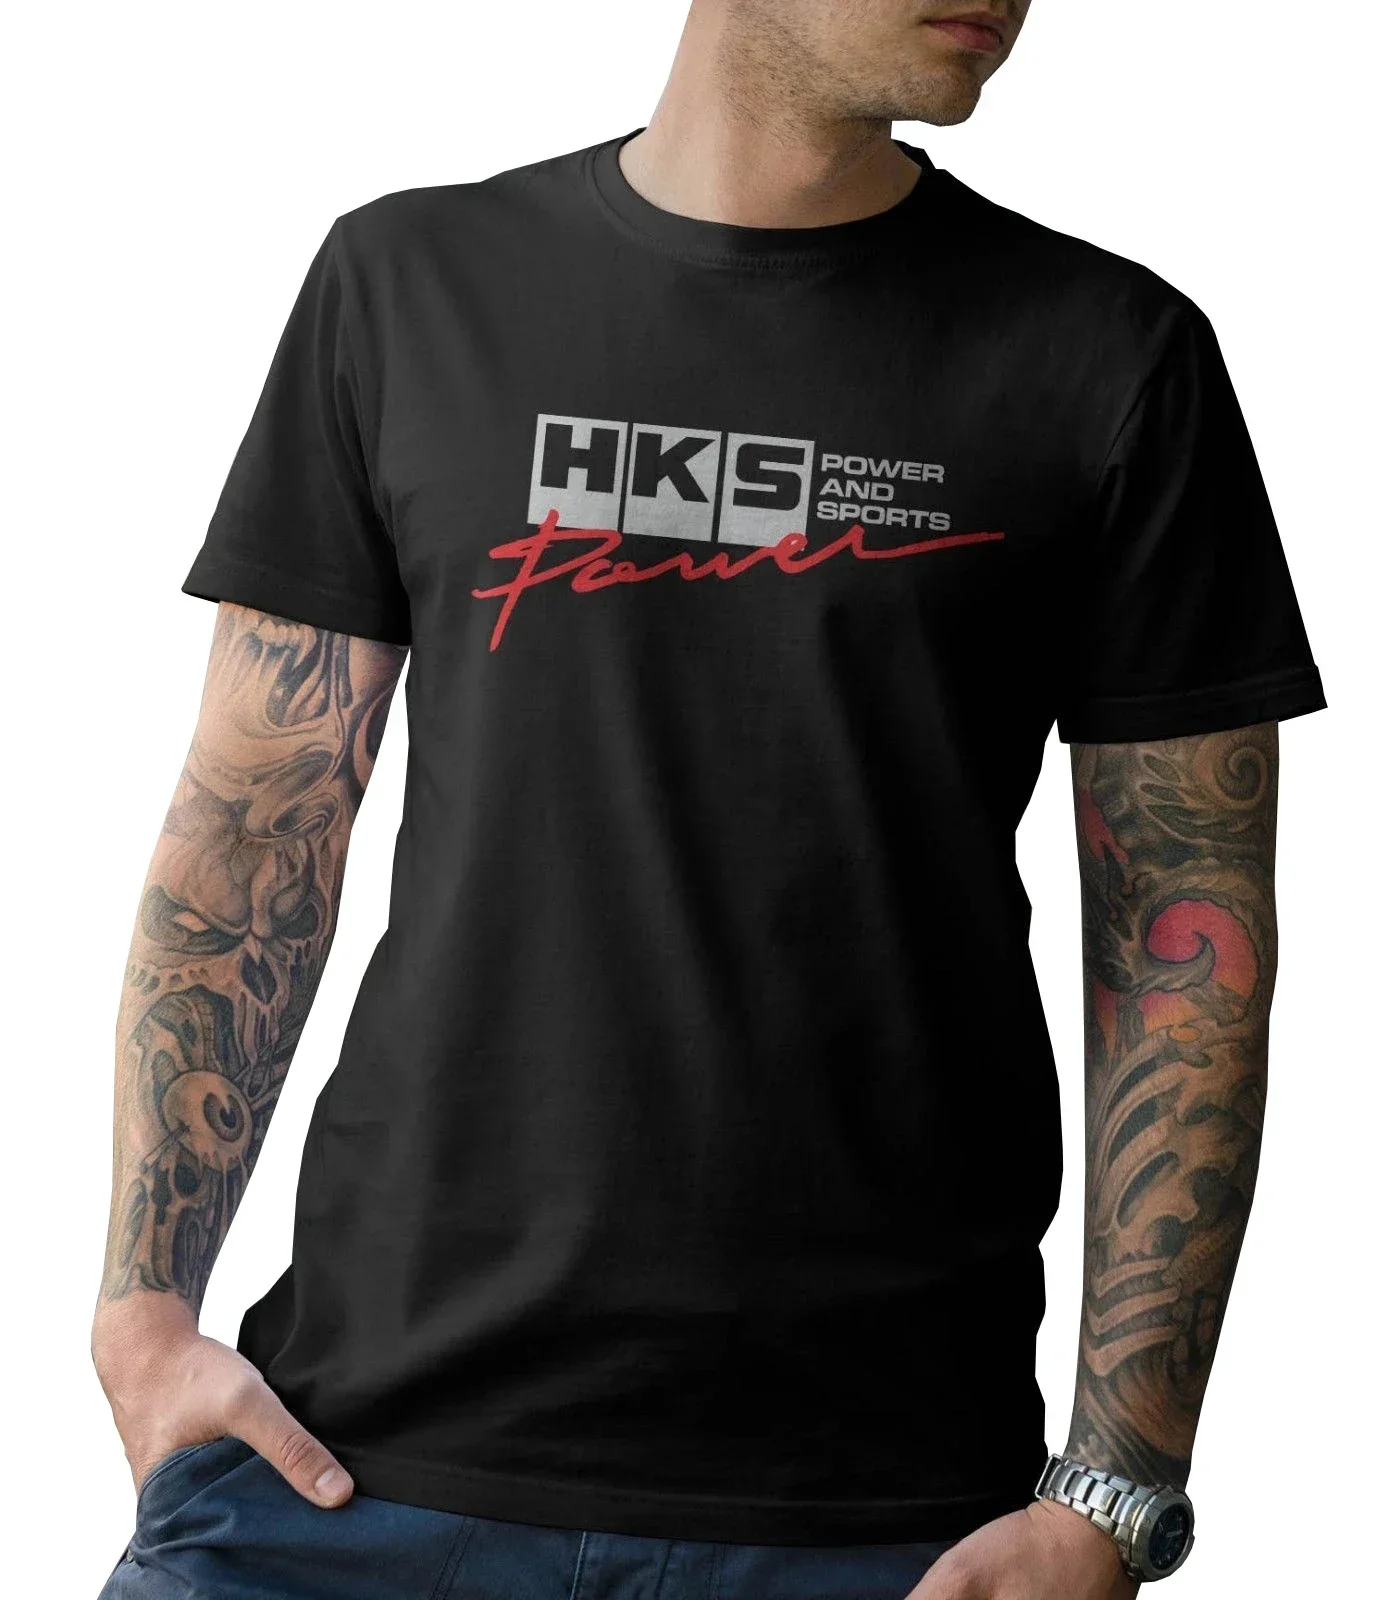 

Limited HKS Power and Sportser Performance Turbo Logo Black T-Shirt Size Summer Fashion T Shirt